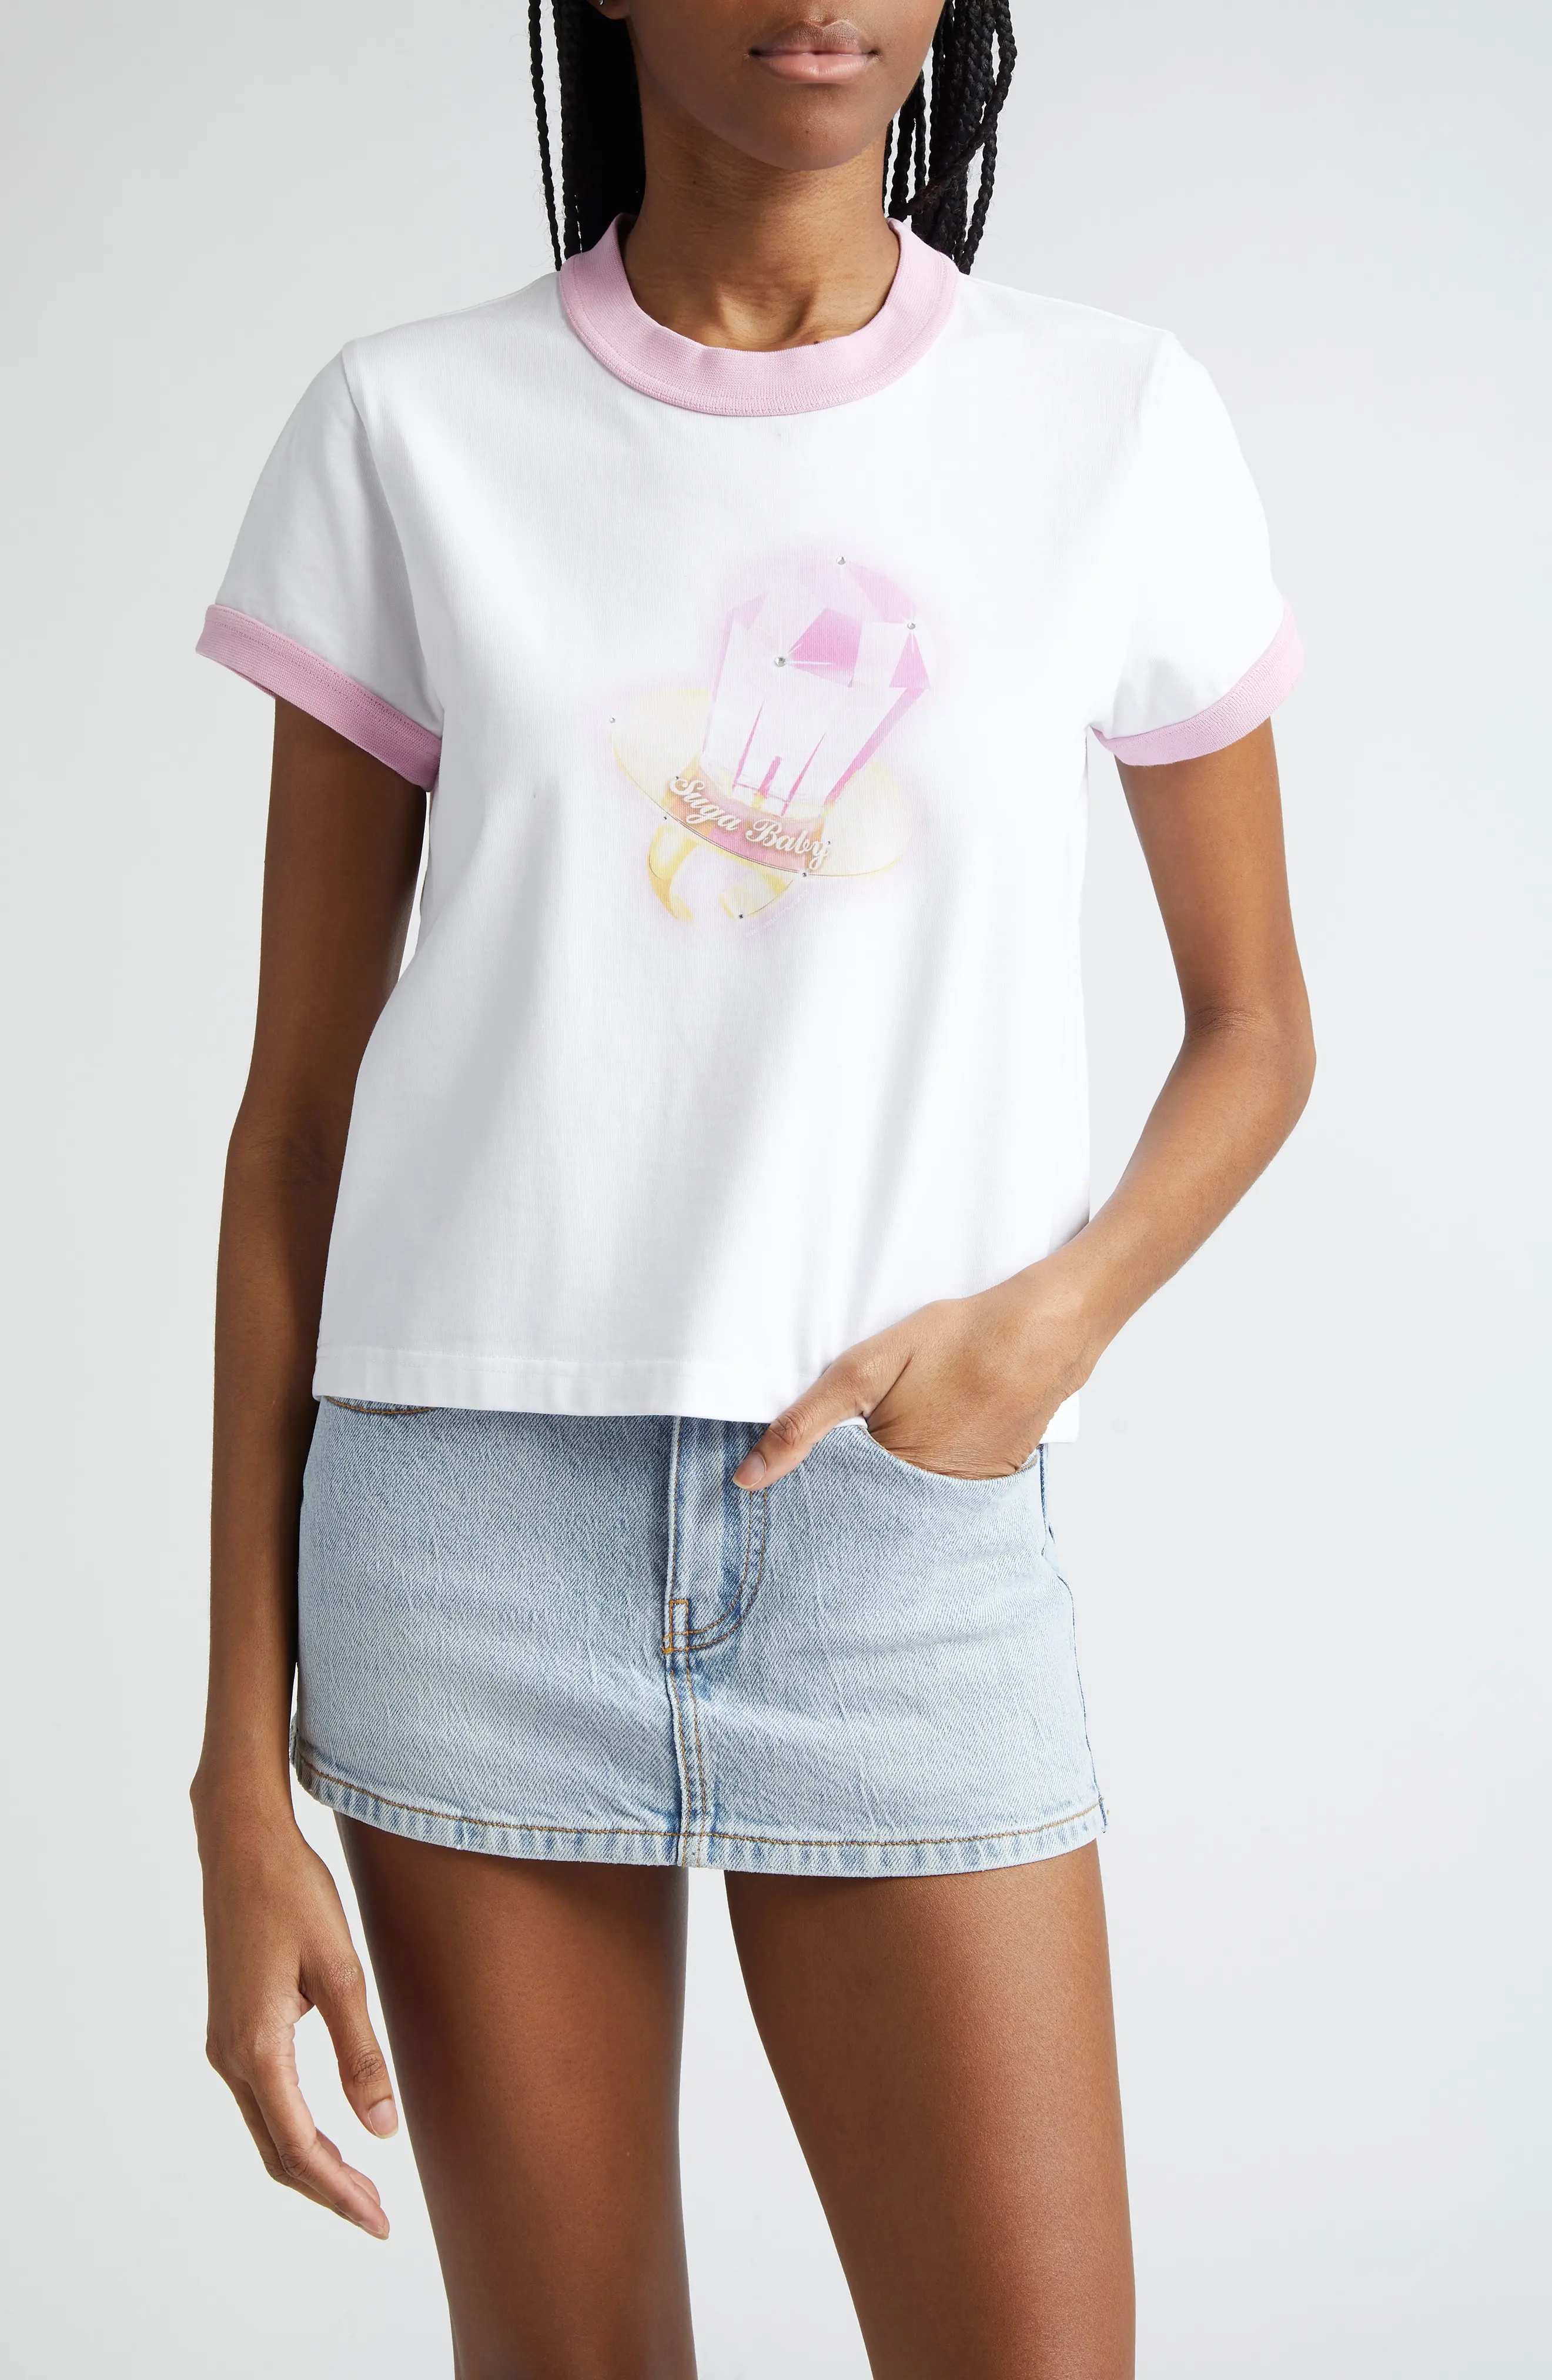 Sugar Baby Shrunken Ringer Graphic T-Shirt in White/Pink - 1